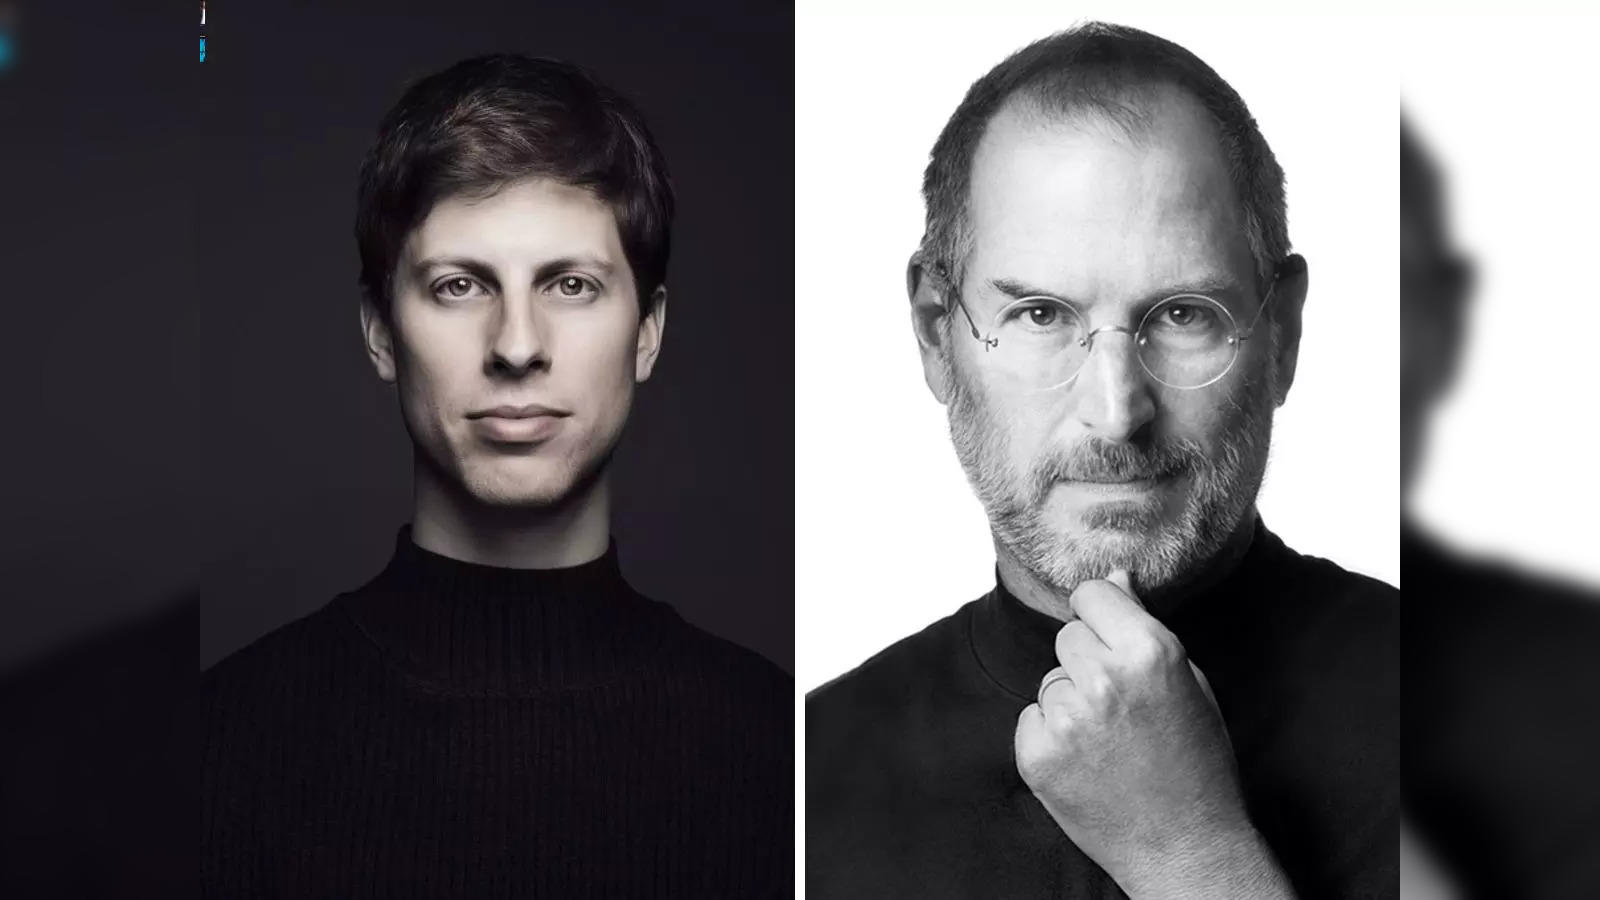 sam altman news: 'It's giving Steve Jobs vibes': Open AI fires CEO